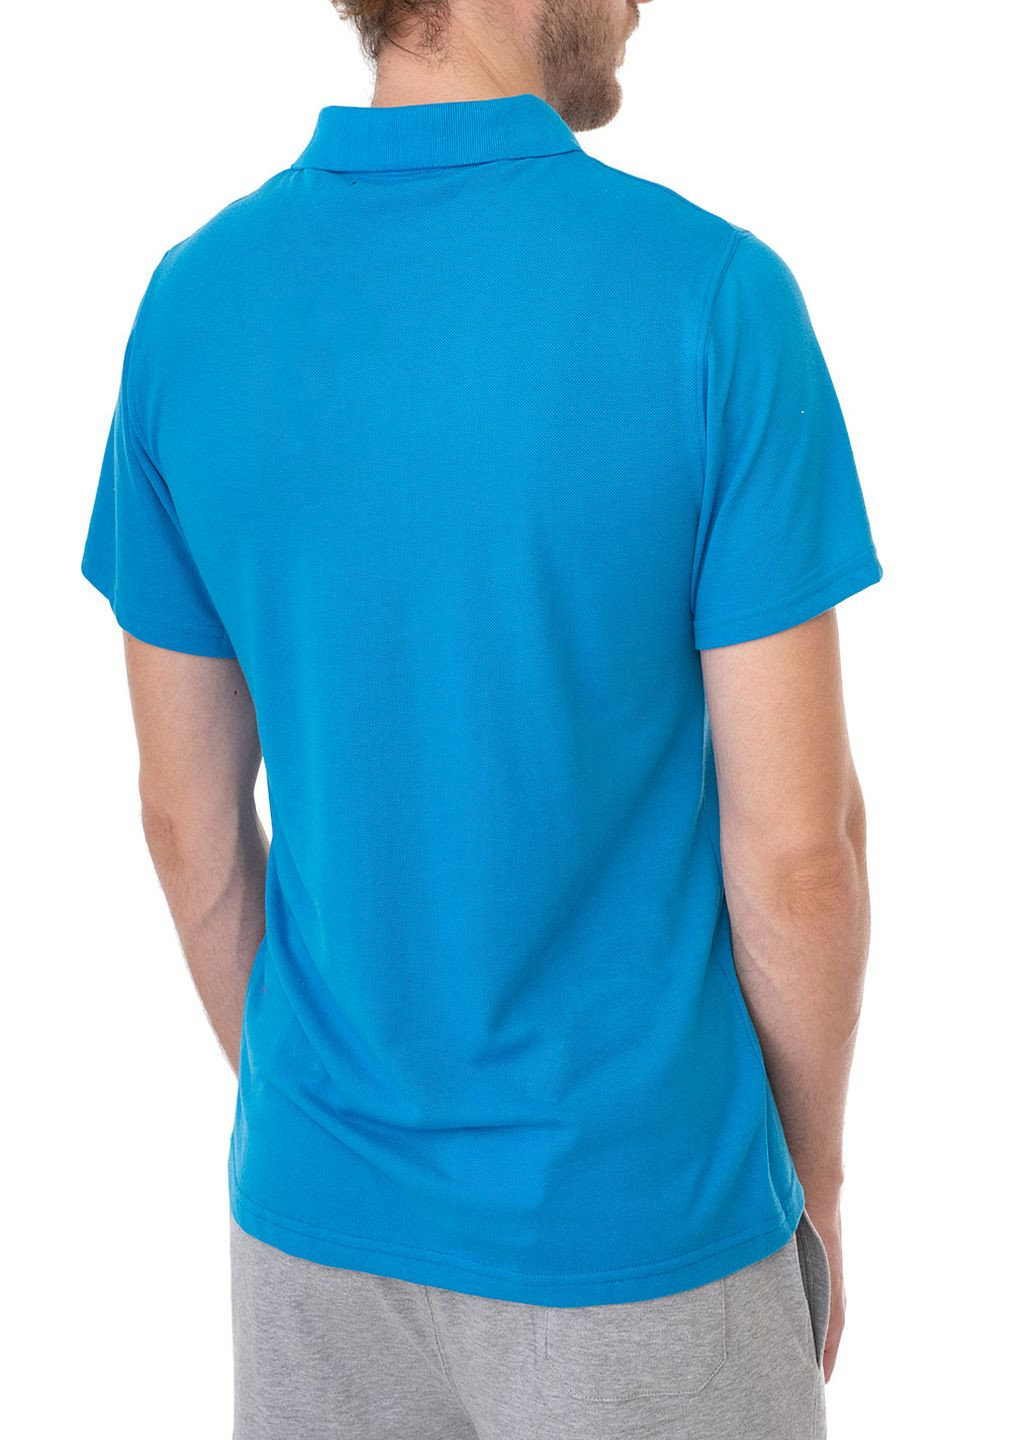 Синяя футболка-поло для мужчин E-Bound